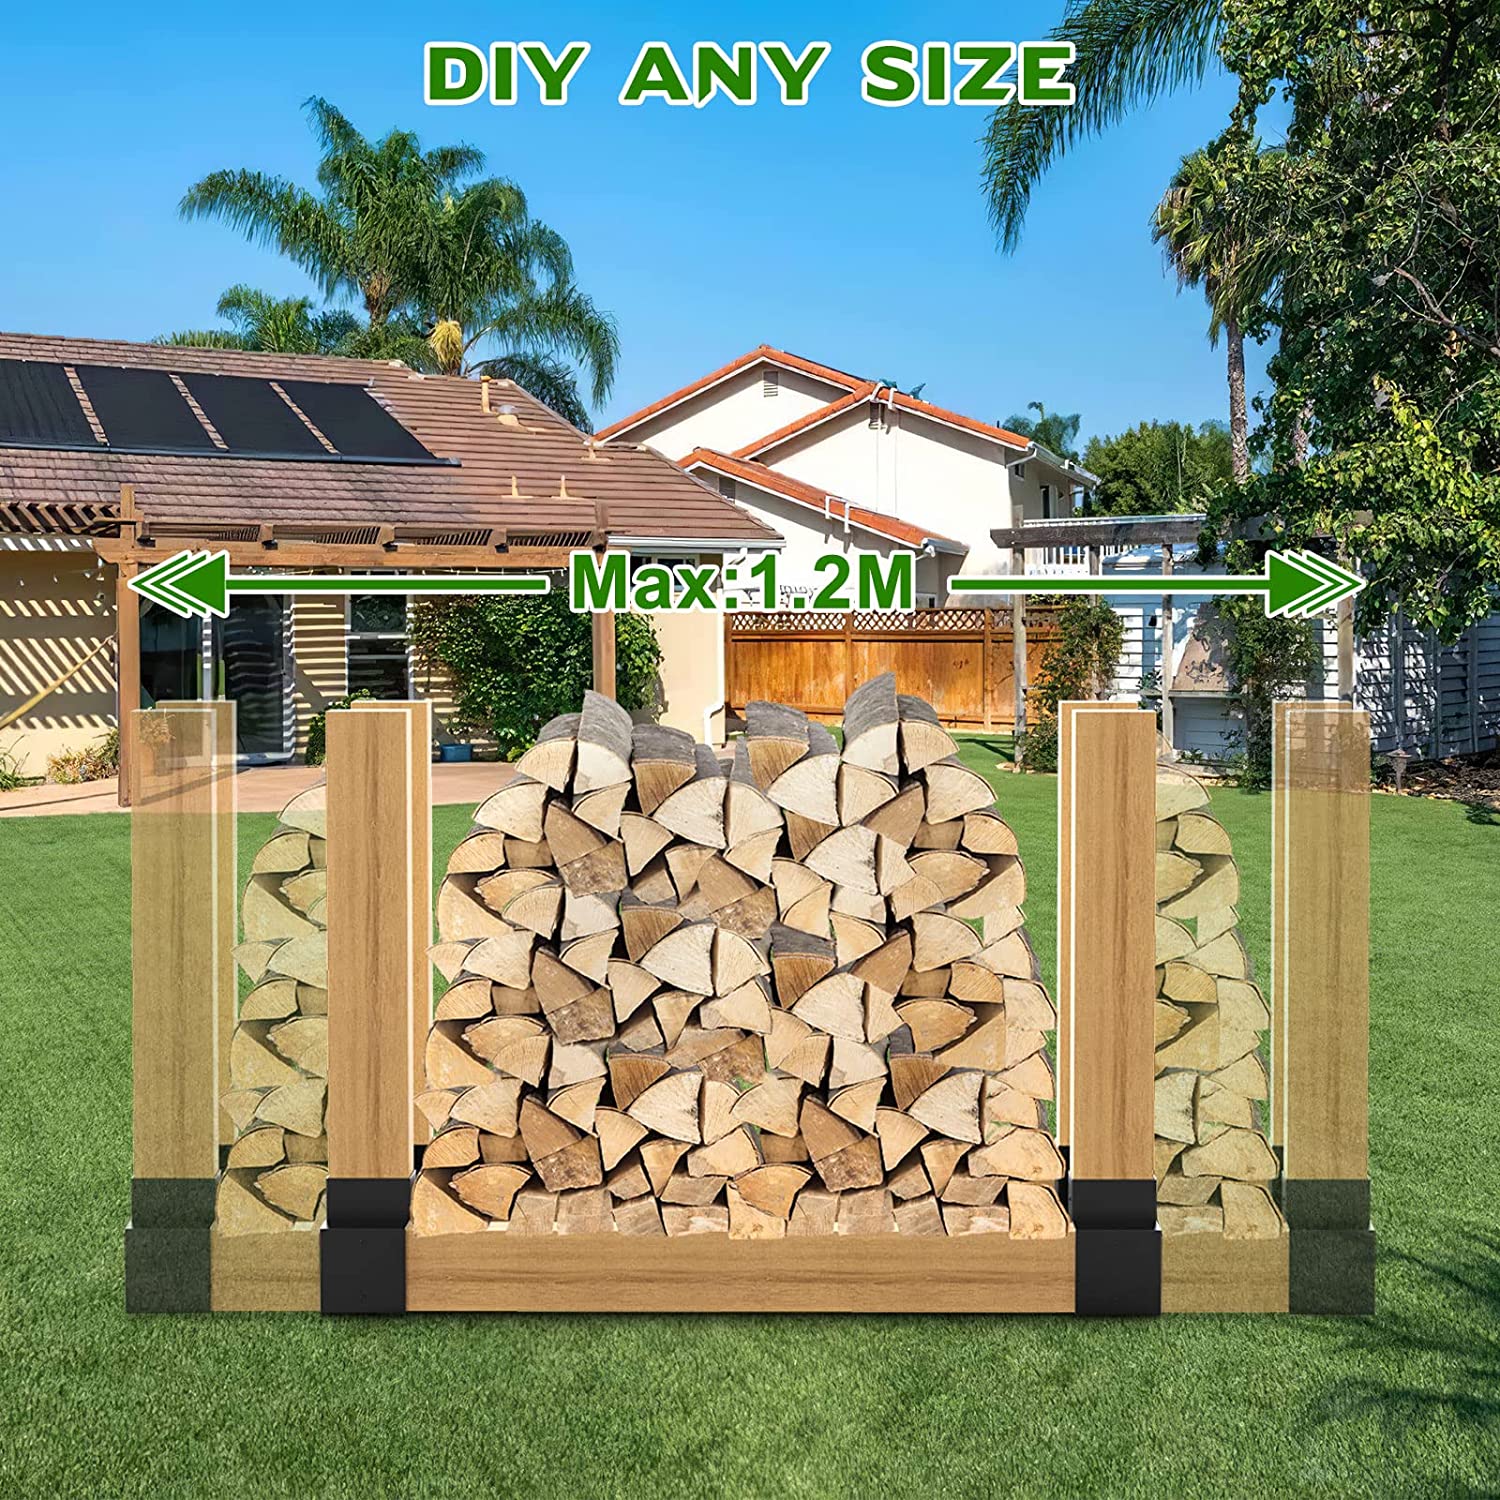 Firewood Log Storage Rack    